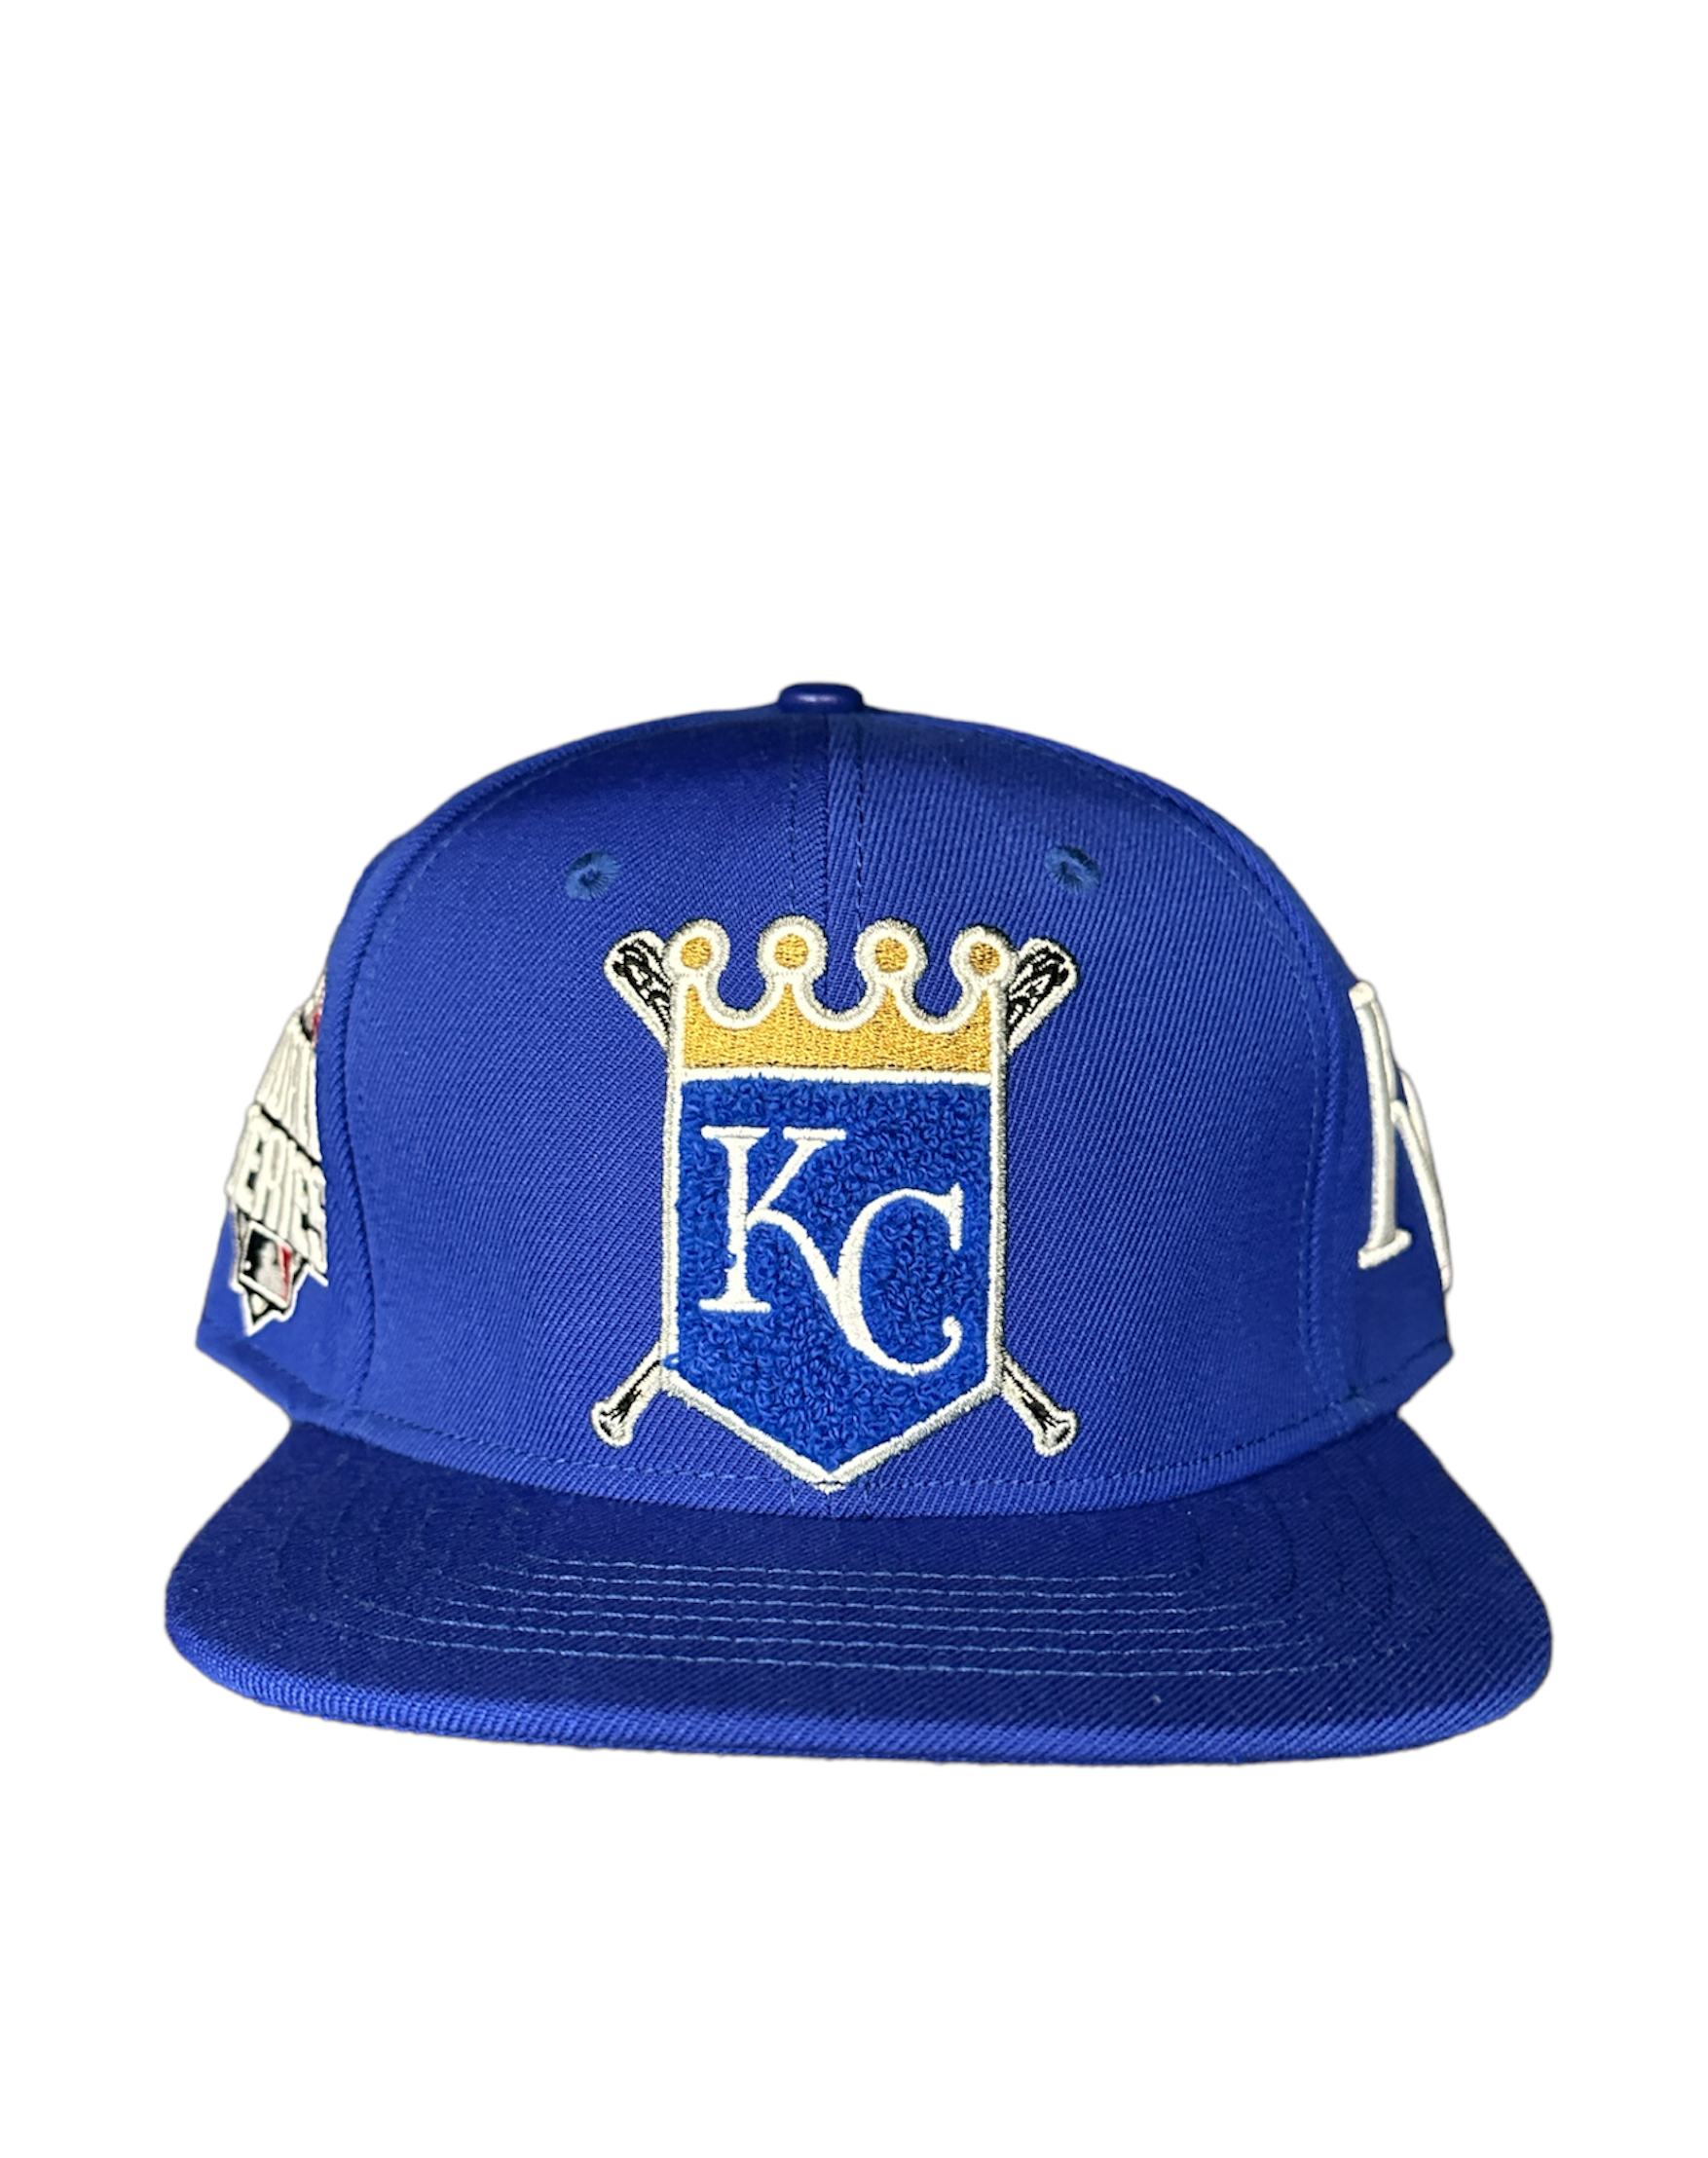 Pro Standard - Kansas City Royals Mashup Snapback Hat - Royal Blue